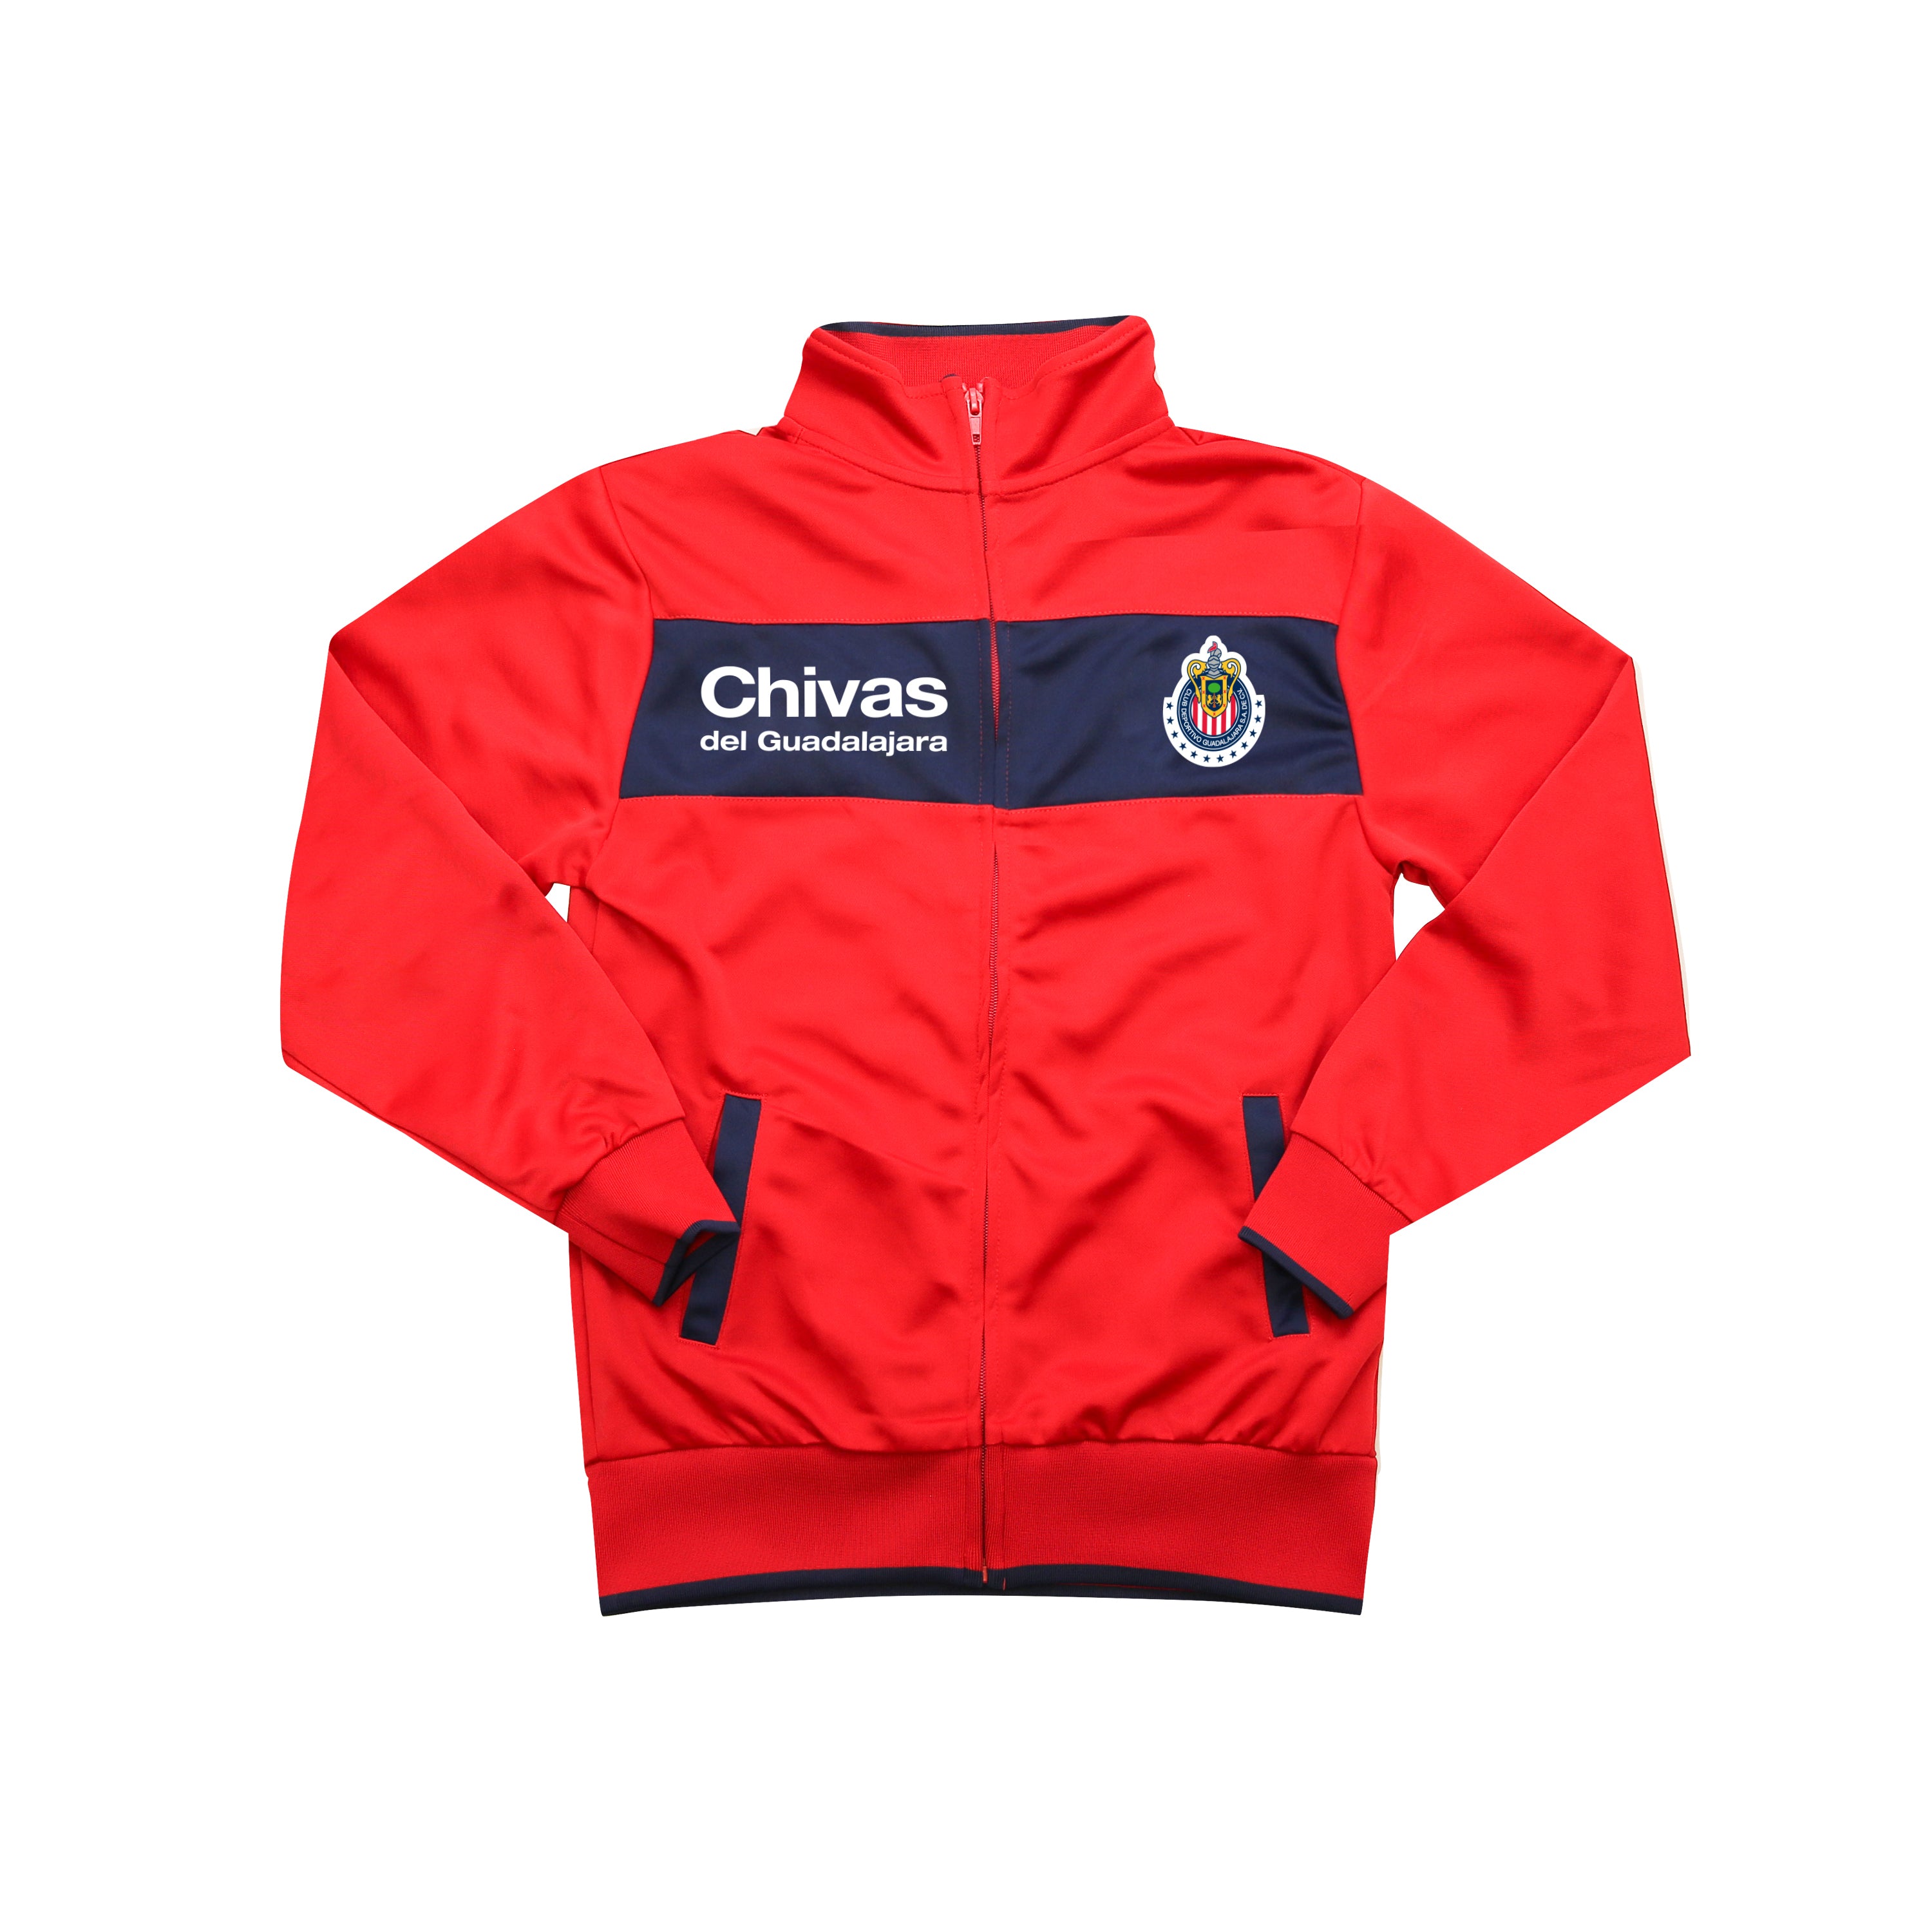 chivas lightweight jacket